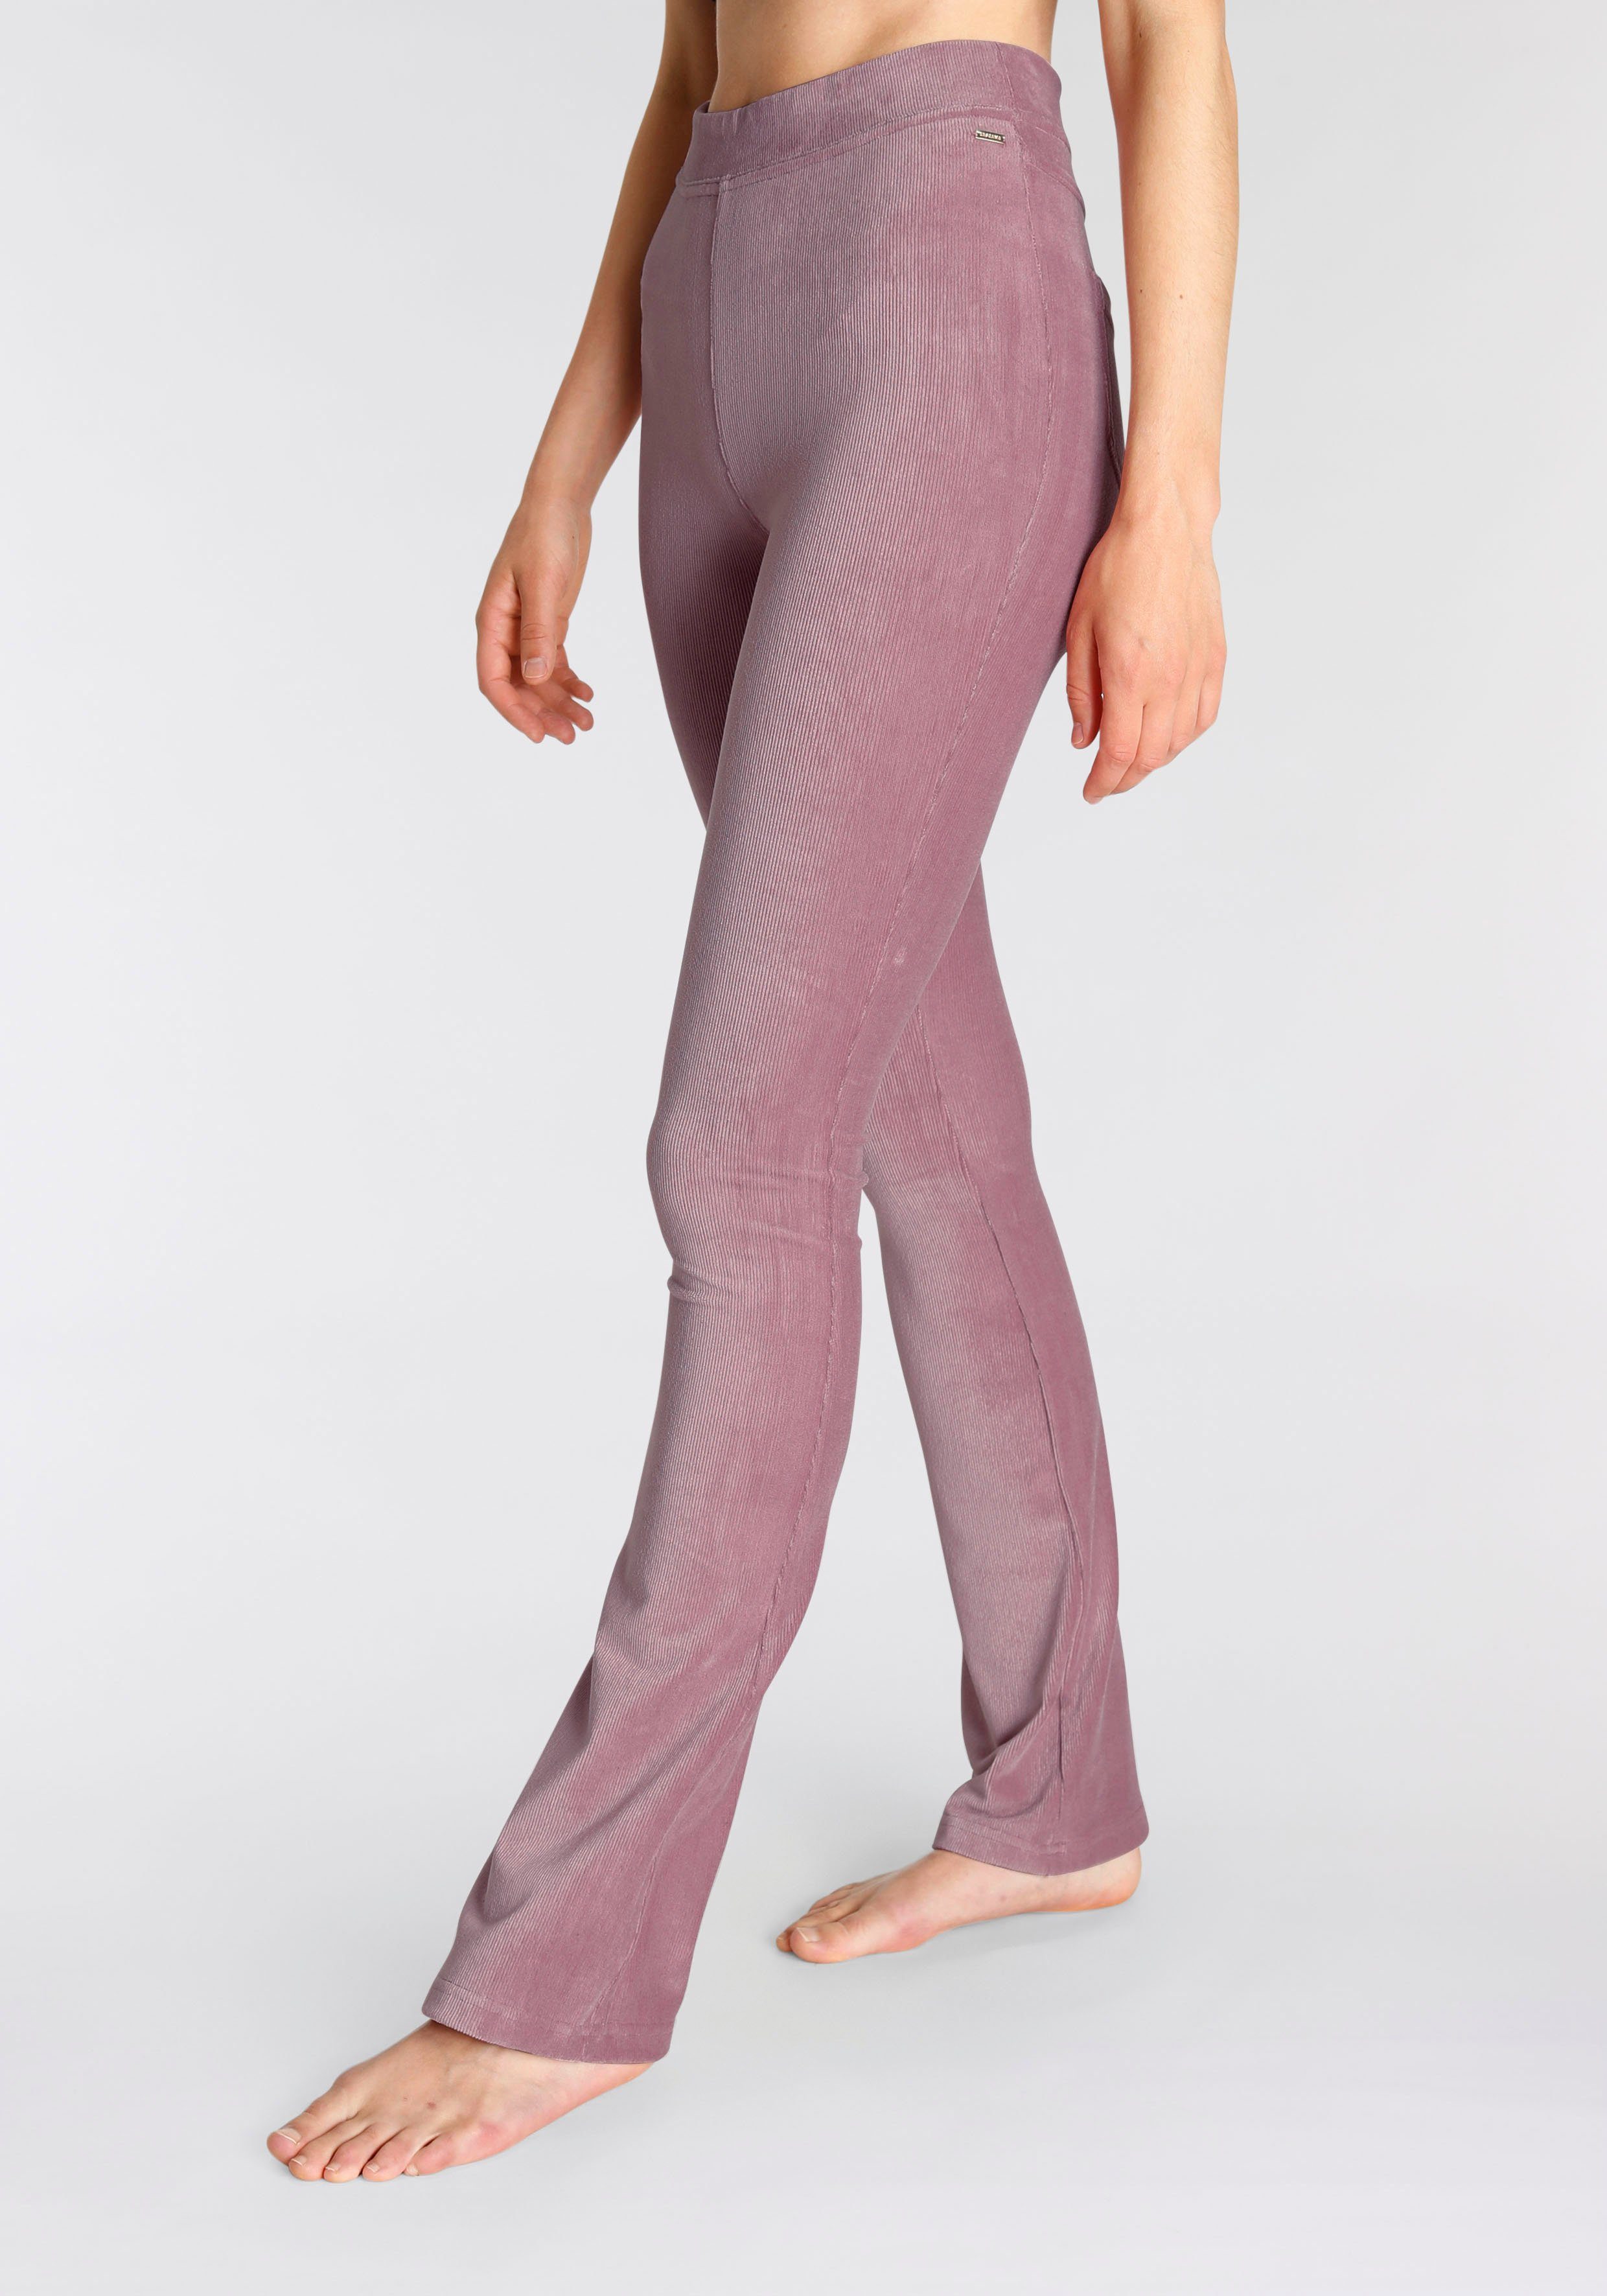 LASCANA Jazzpants Cord-Optik, Material Loungewear in rosa weichem aus